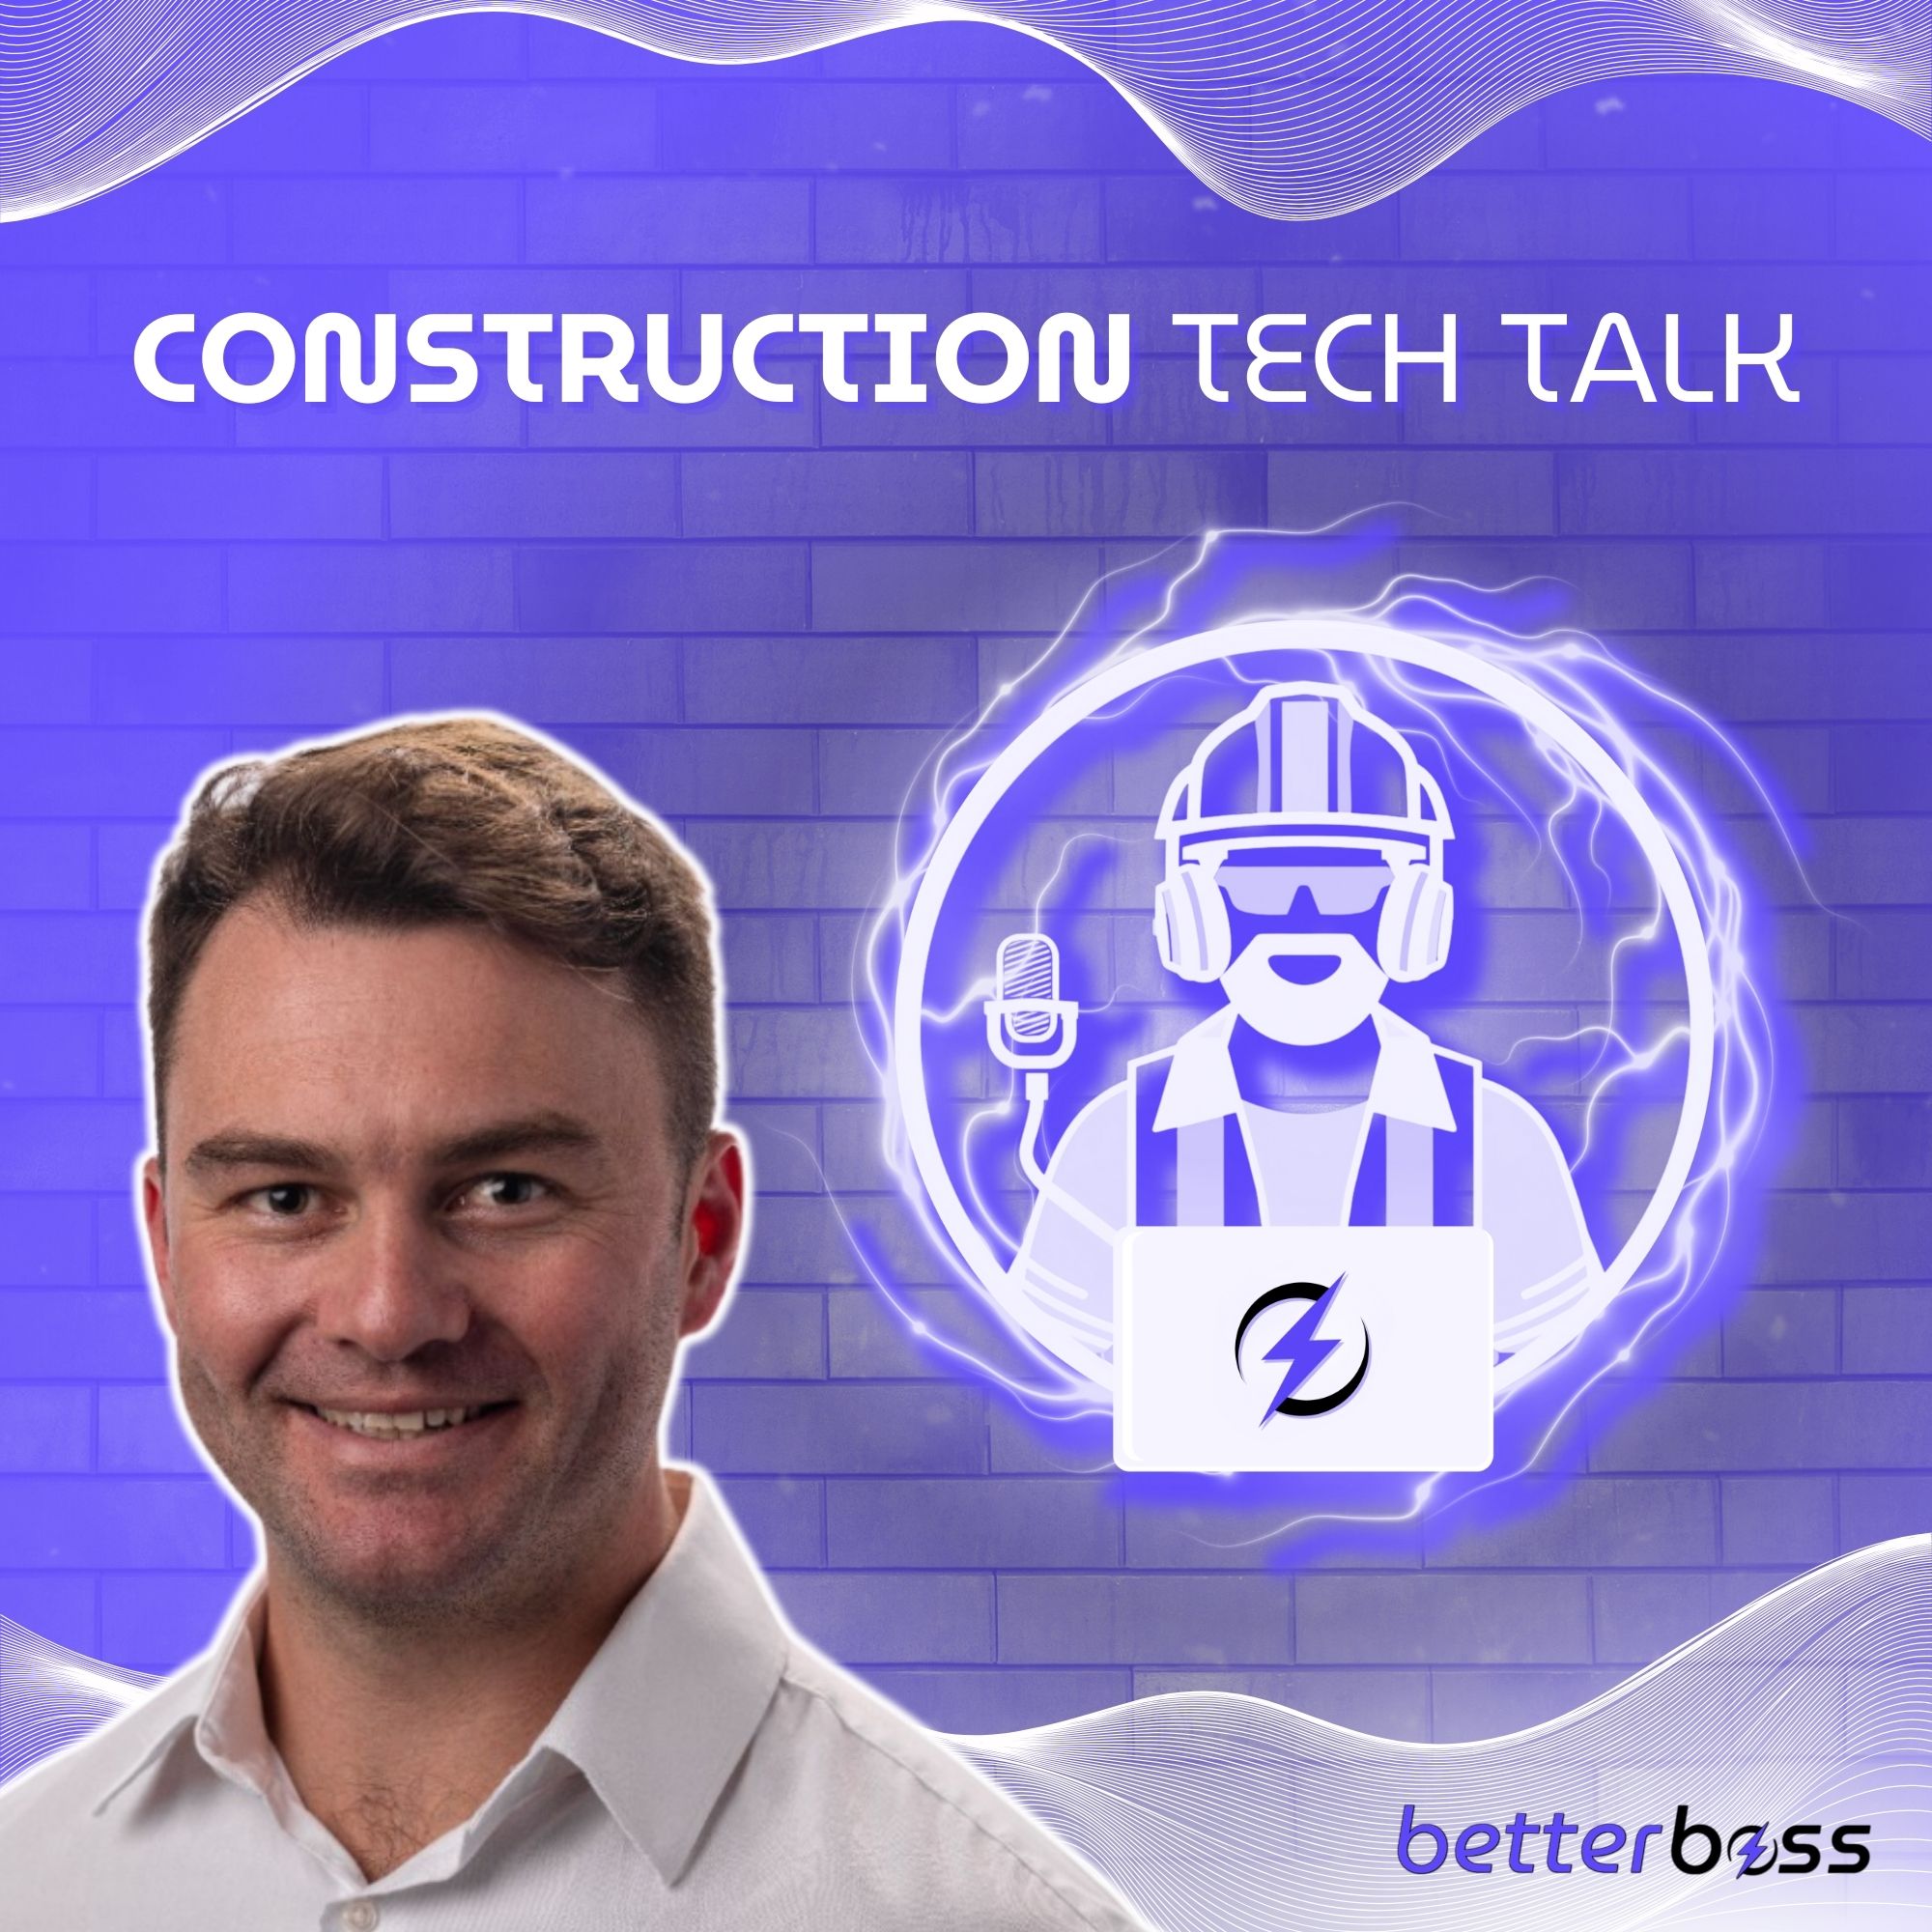 Construction Insurance / Insurance for Contractors - Construction Tech Talk